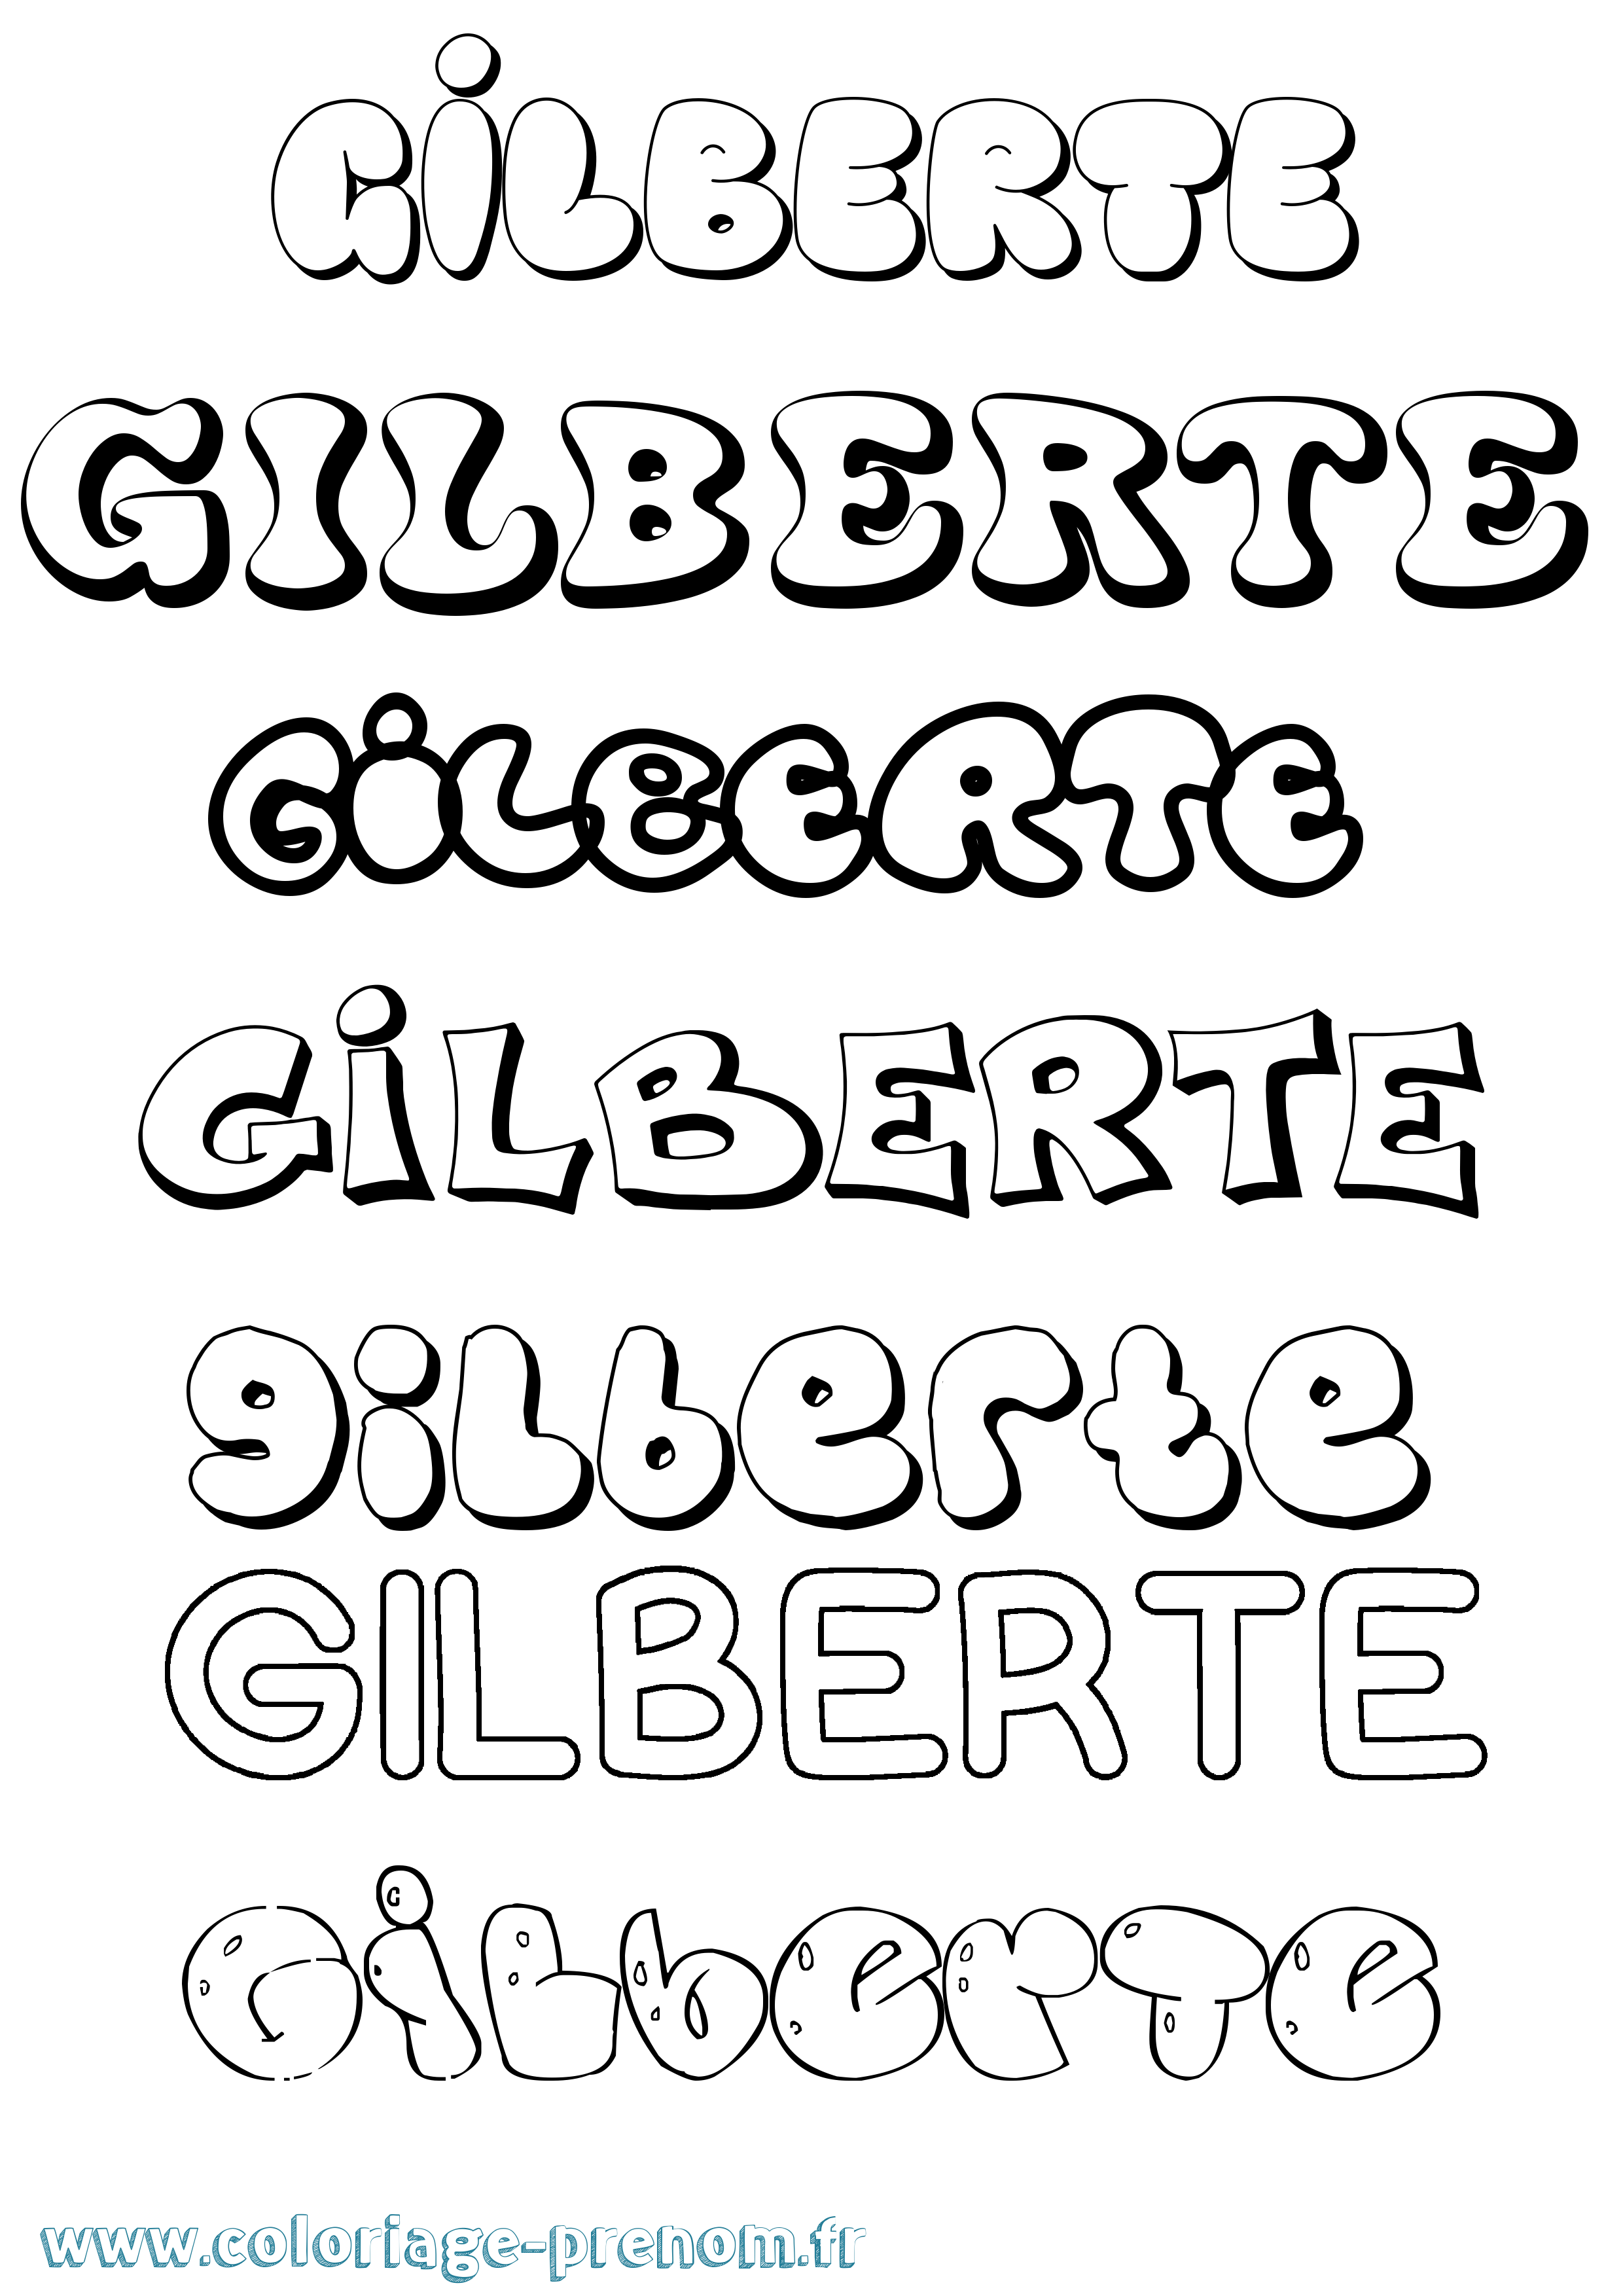 Coloriage prénom Gilberte Bubble